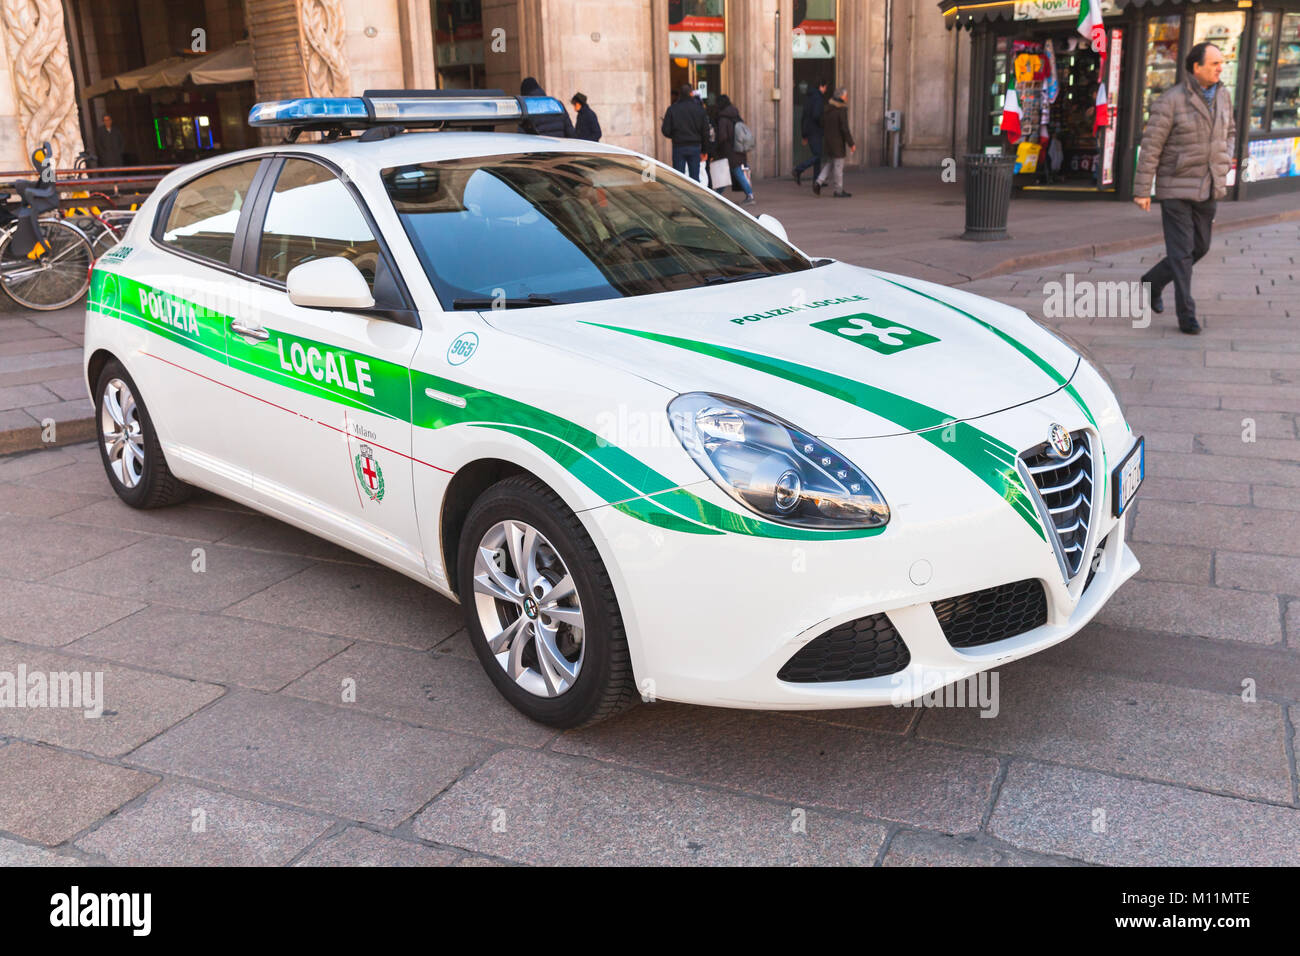 Milan, Italie - 19 janvier 2018 : Alfa Romeo Giulietta, voiture de police italienne la Piazza del Duomo de patrouilles, place centrale de la ville de Milano Banque D'Images